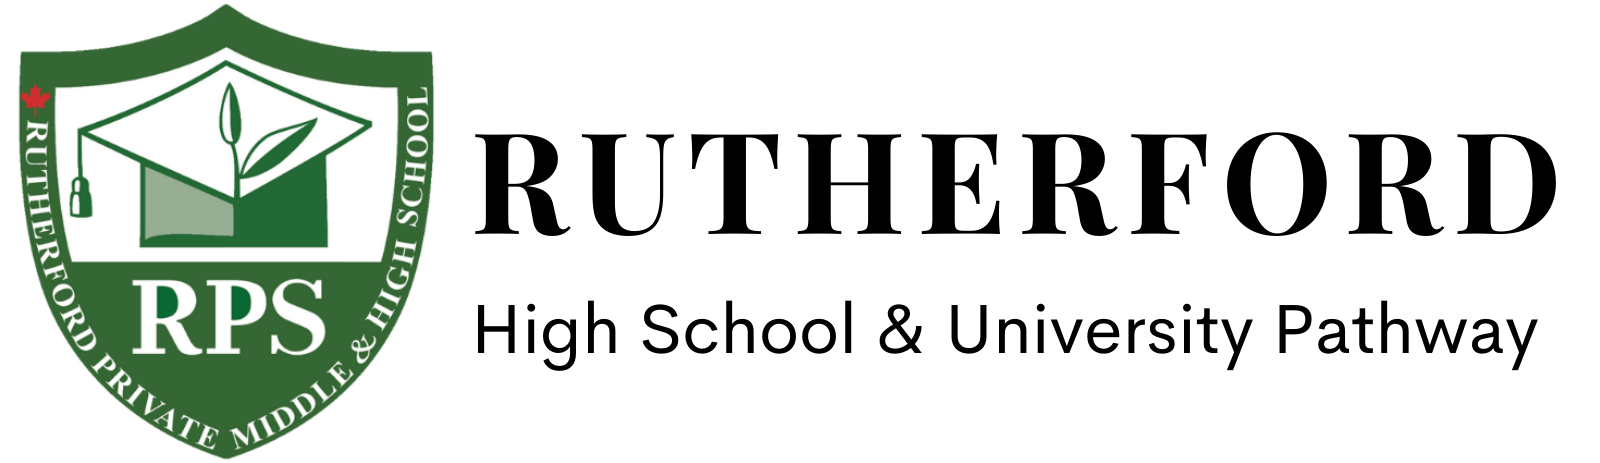 High School & University Pathway